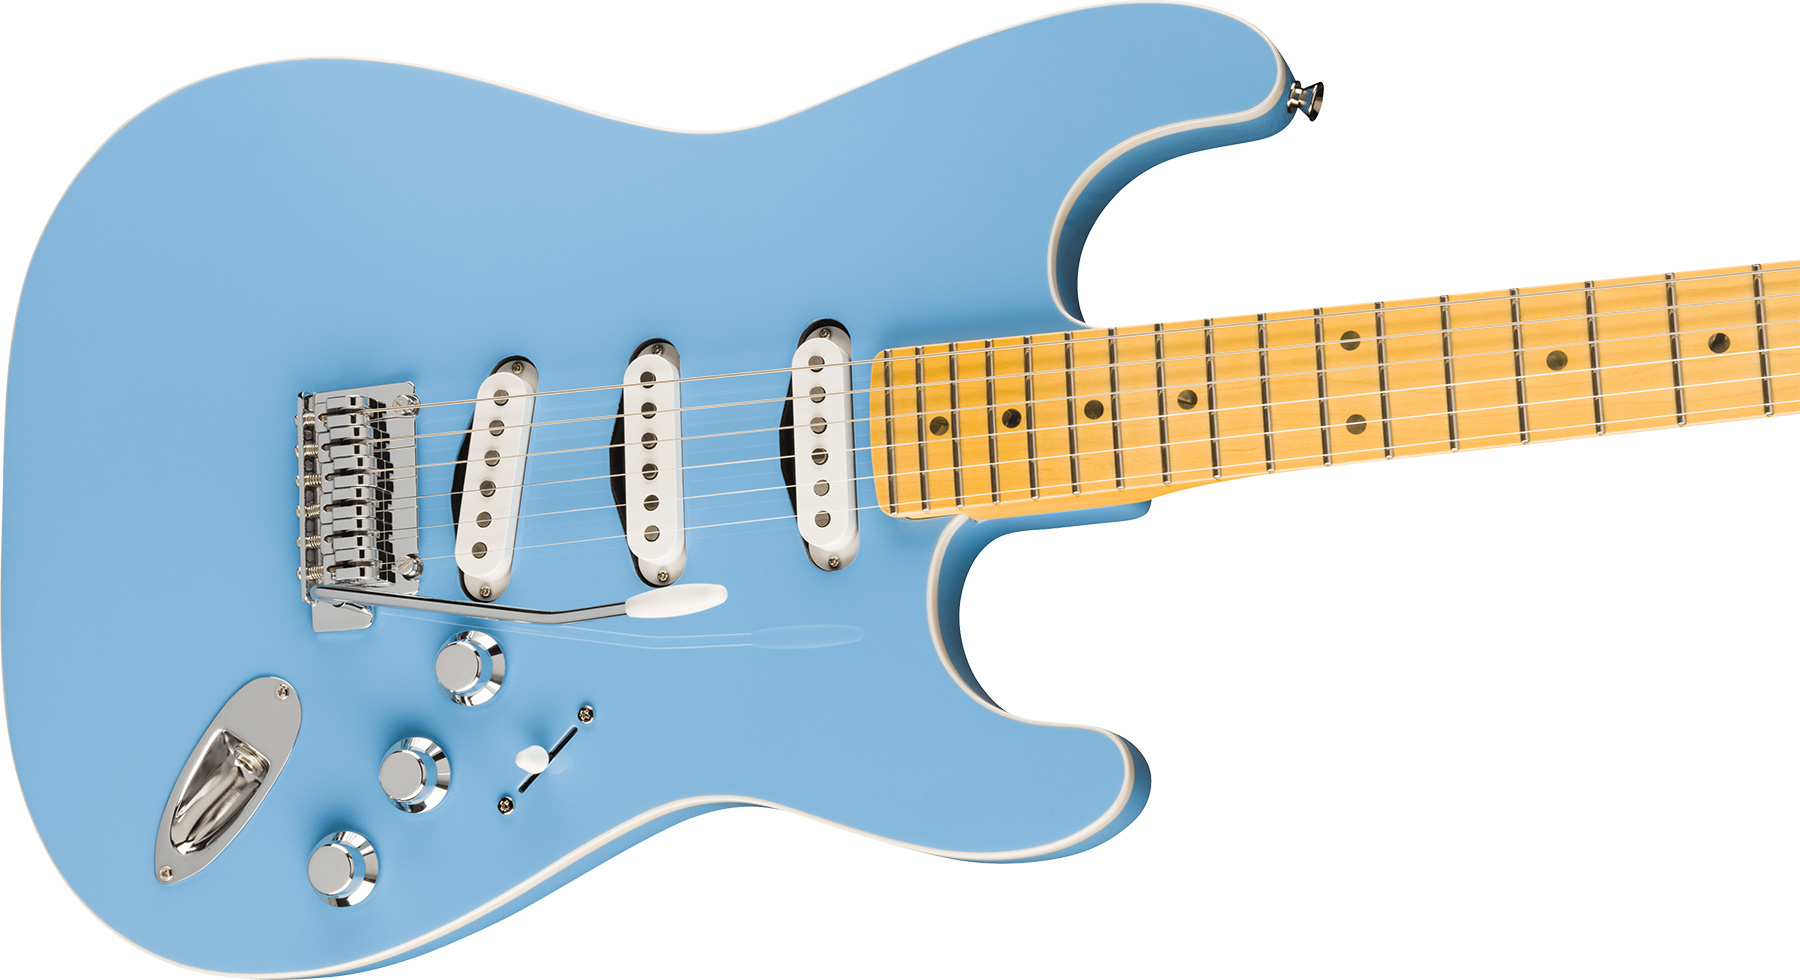 Fender Strat Aerodyne Special Jap 3s Trem Mn - California Blue - Str shape electric guitar - Variation 2